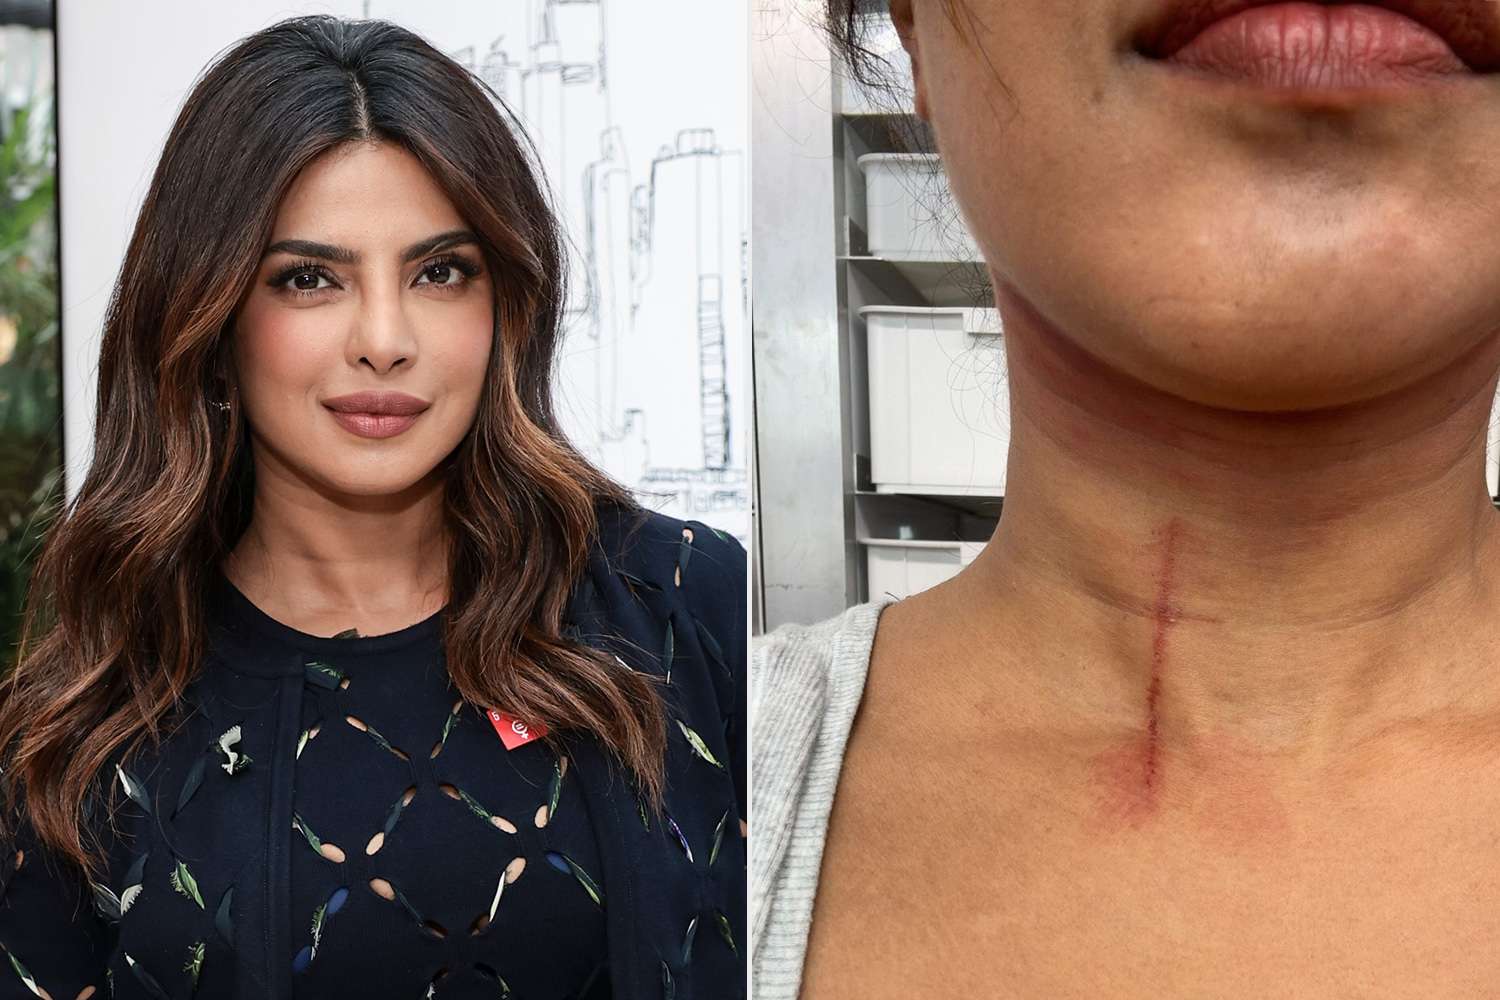 Priyanka Chopra Shares Image of Neck Cut Suffered Doing Stunts on New Movie: ‘Hazards on My Jobs’